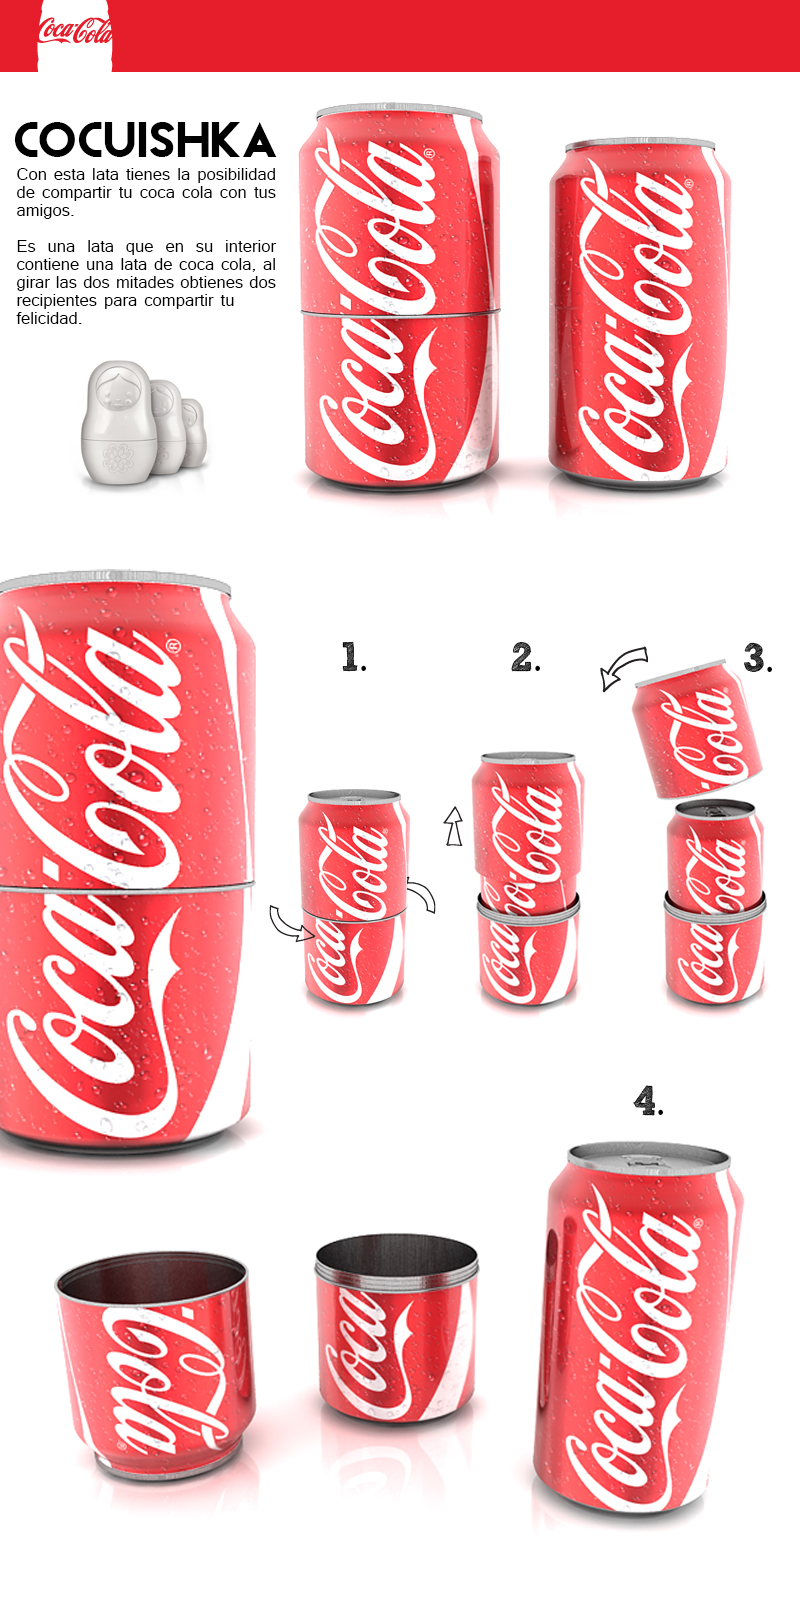 Latas matrioskas empaques can Coca Cola design Packaging